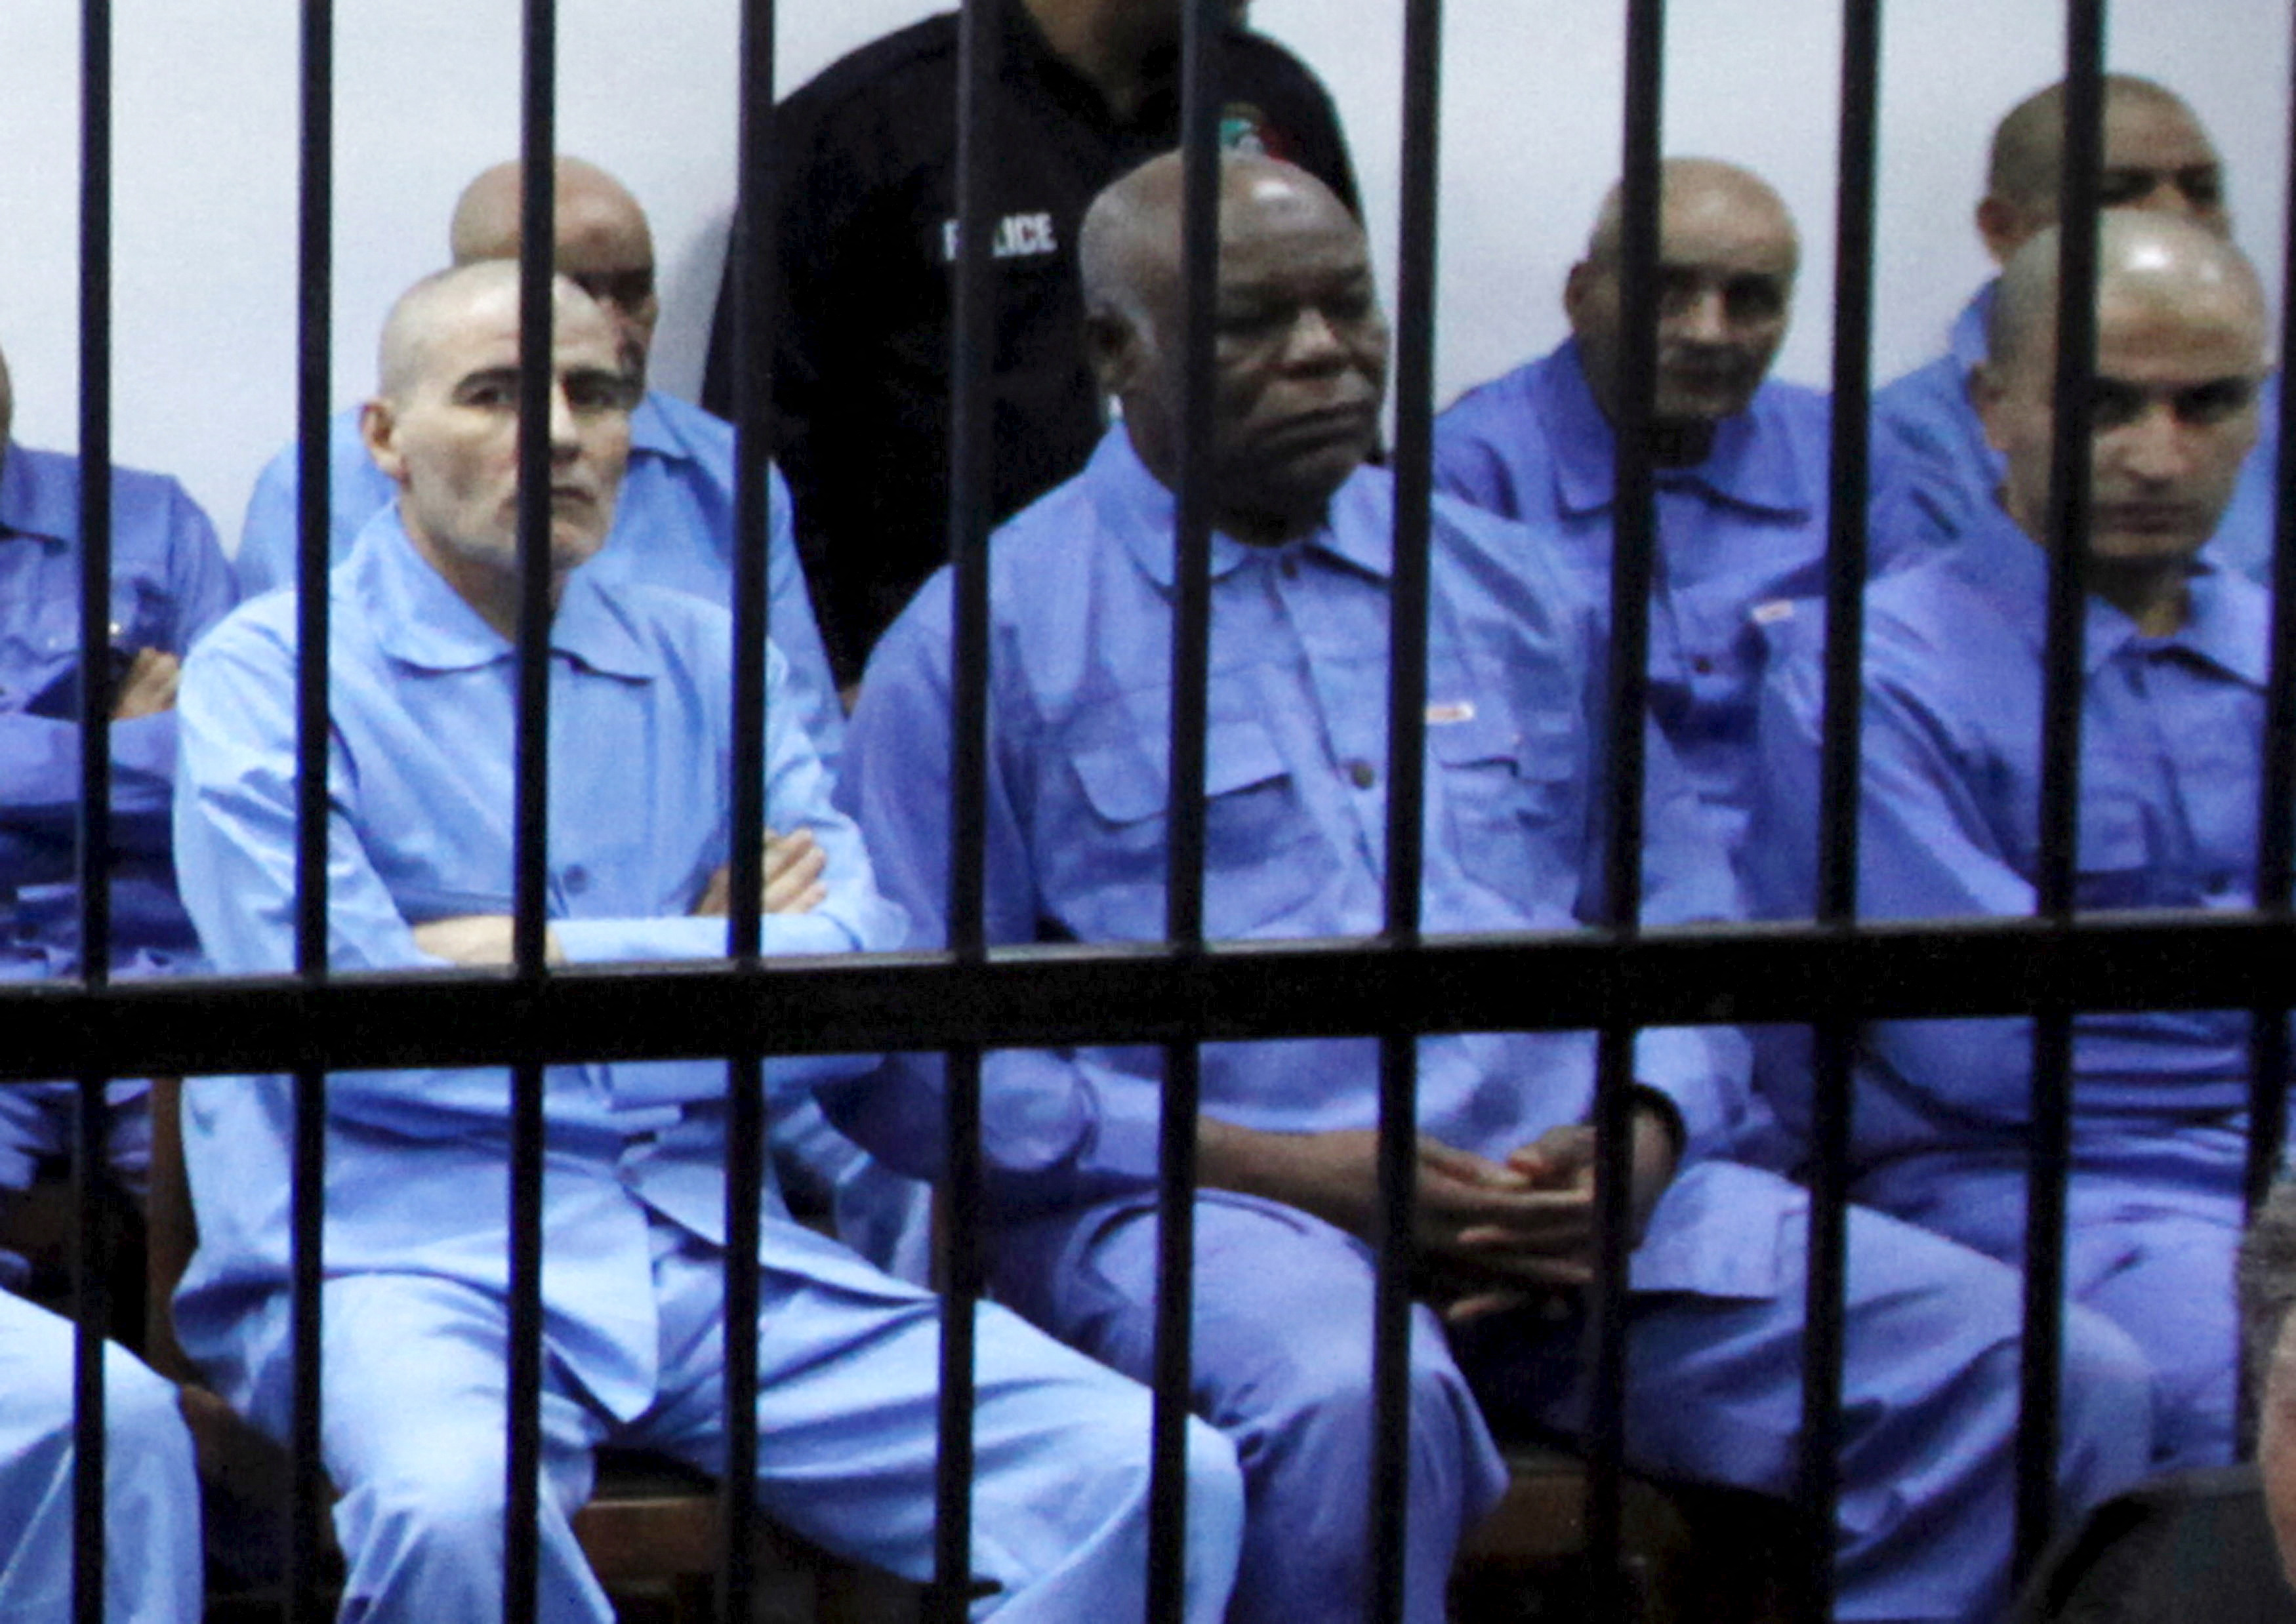 Abu Agila Mohammad Mas'ud Kheir Al-Marimi sits behind bars during a hearing at a courtroom in Tripoli